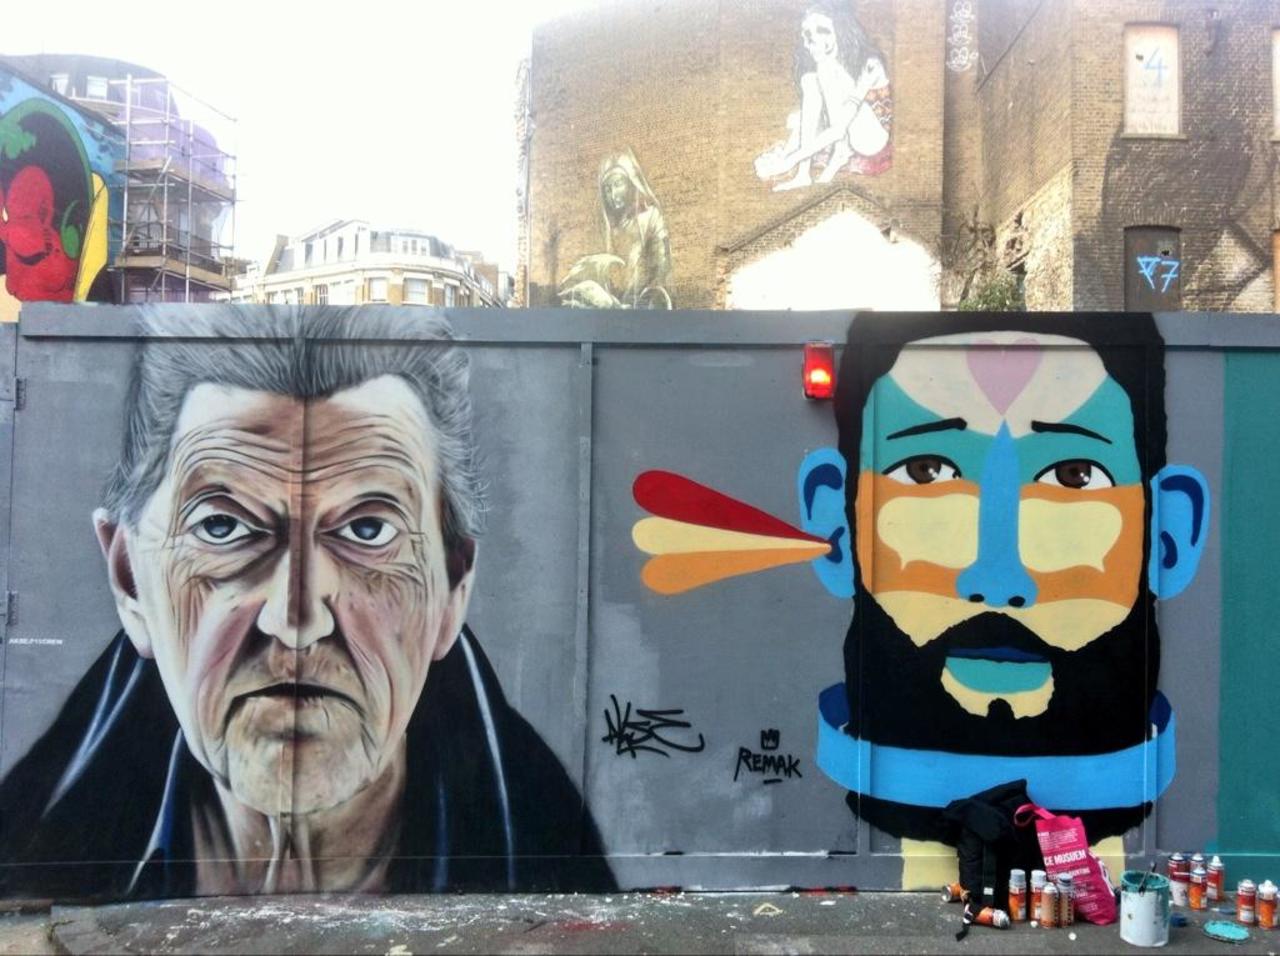 Fabulous new #graffiti on Leonard Street by @Akse_P19 & #Remak

#streetart #art @GoogleStreetArt @GAGibbens http://t.co/EQVOlByfqU